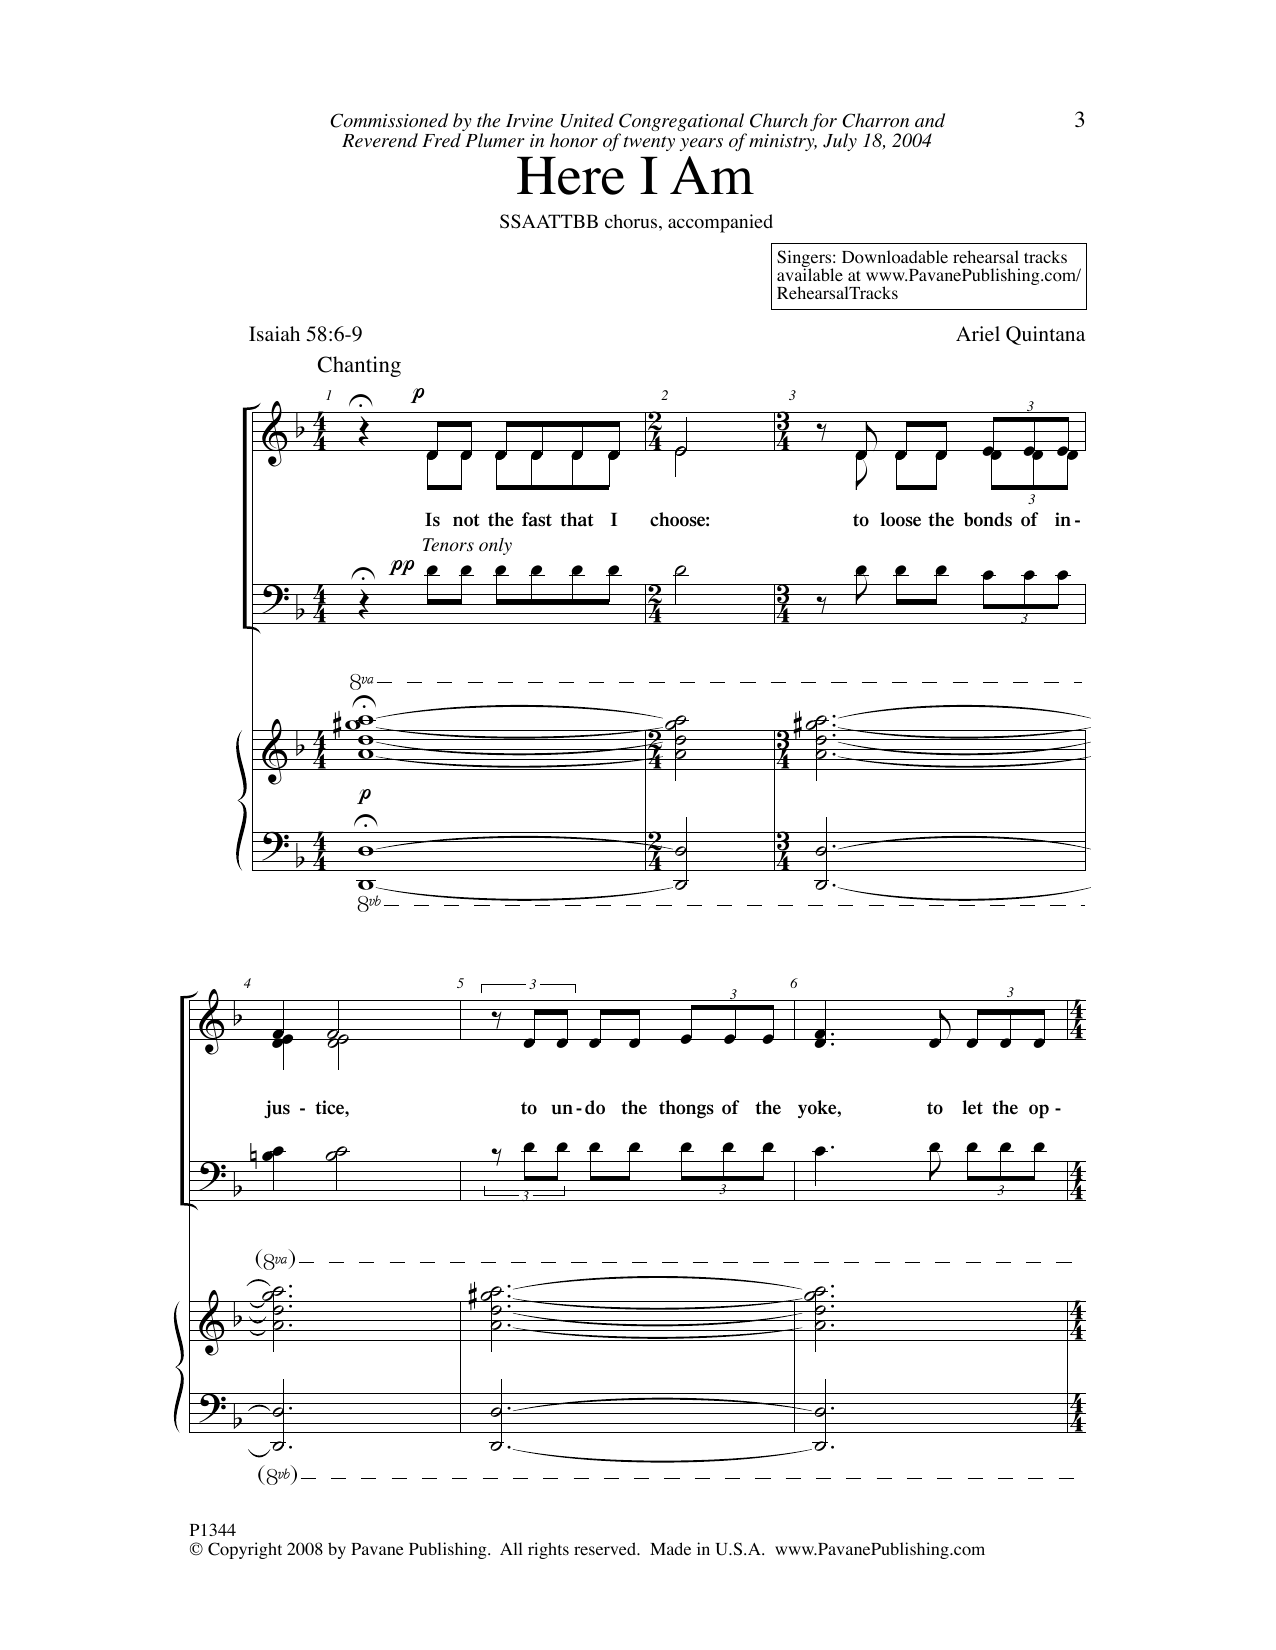 Ariel Quintana Here I Am Sheet Music Notes & Chords for SATB Choir - Download or Print PDF